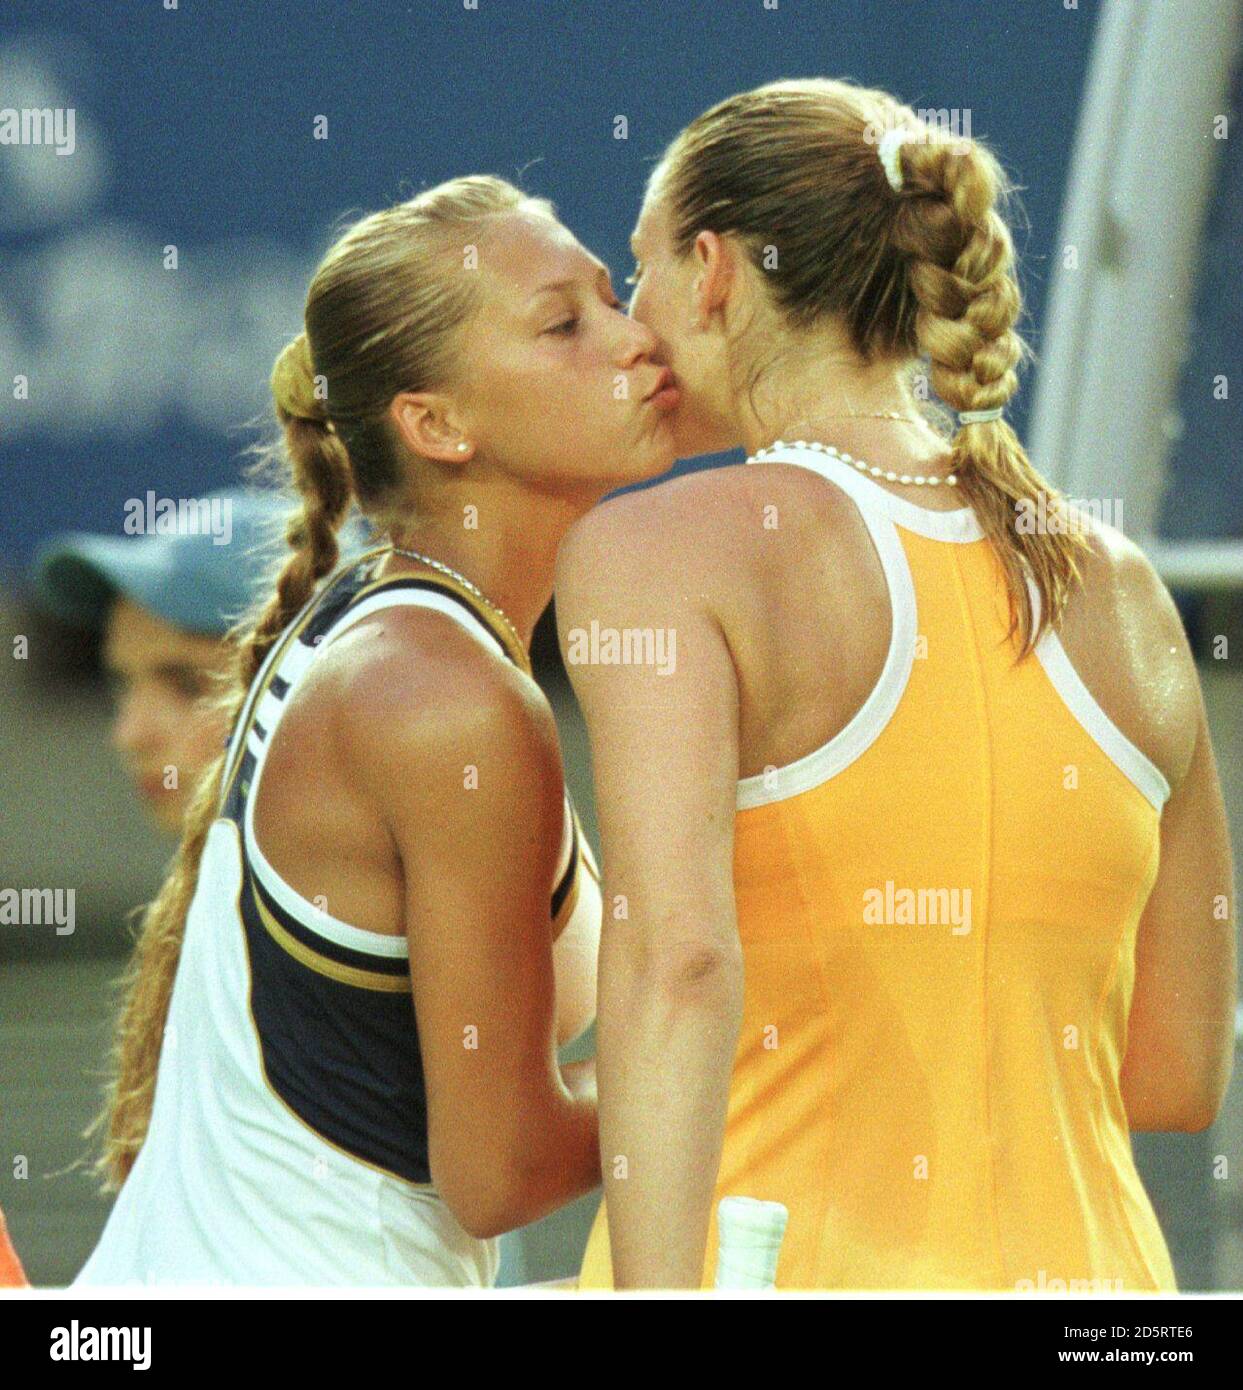 France's Mary Pierce against Russia's Anna Kournikova. Pierce won 6-0, 6-4. Stock Photo